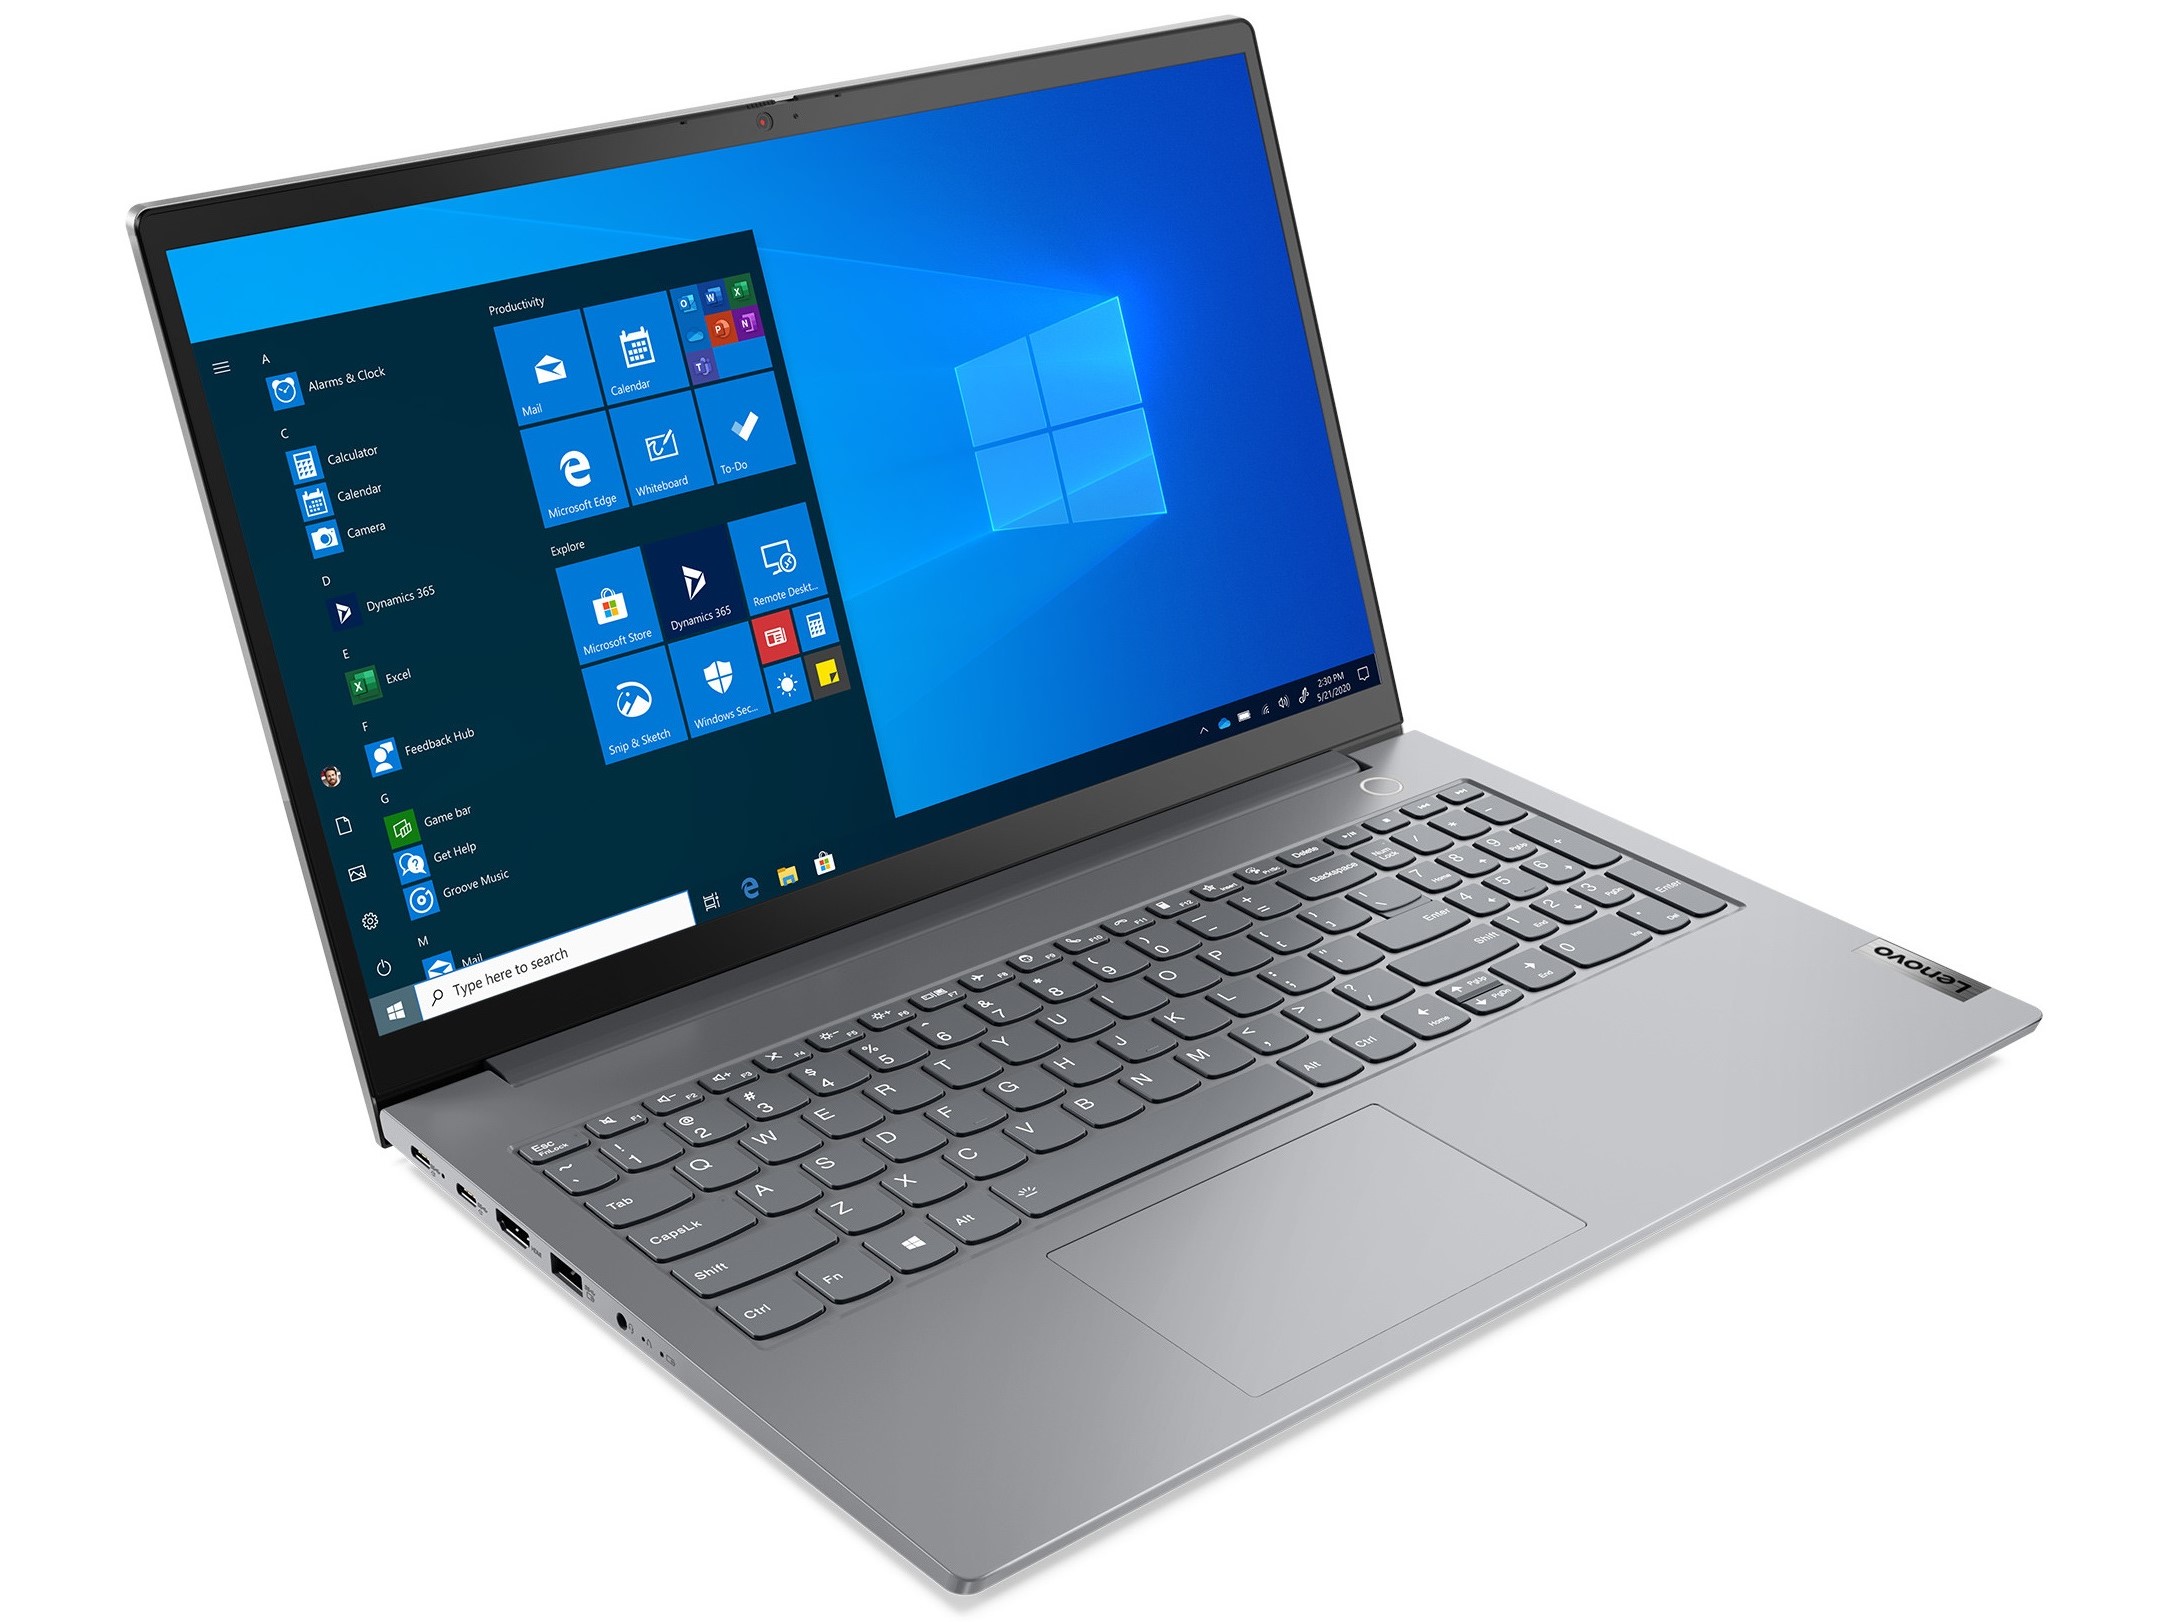 Lenovo ThinkBook 15 Gen2 Laptop review: Affordable Tiger Lake laptop - NotebookCheck.net Reviews